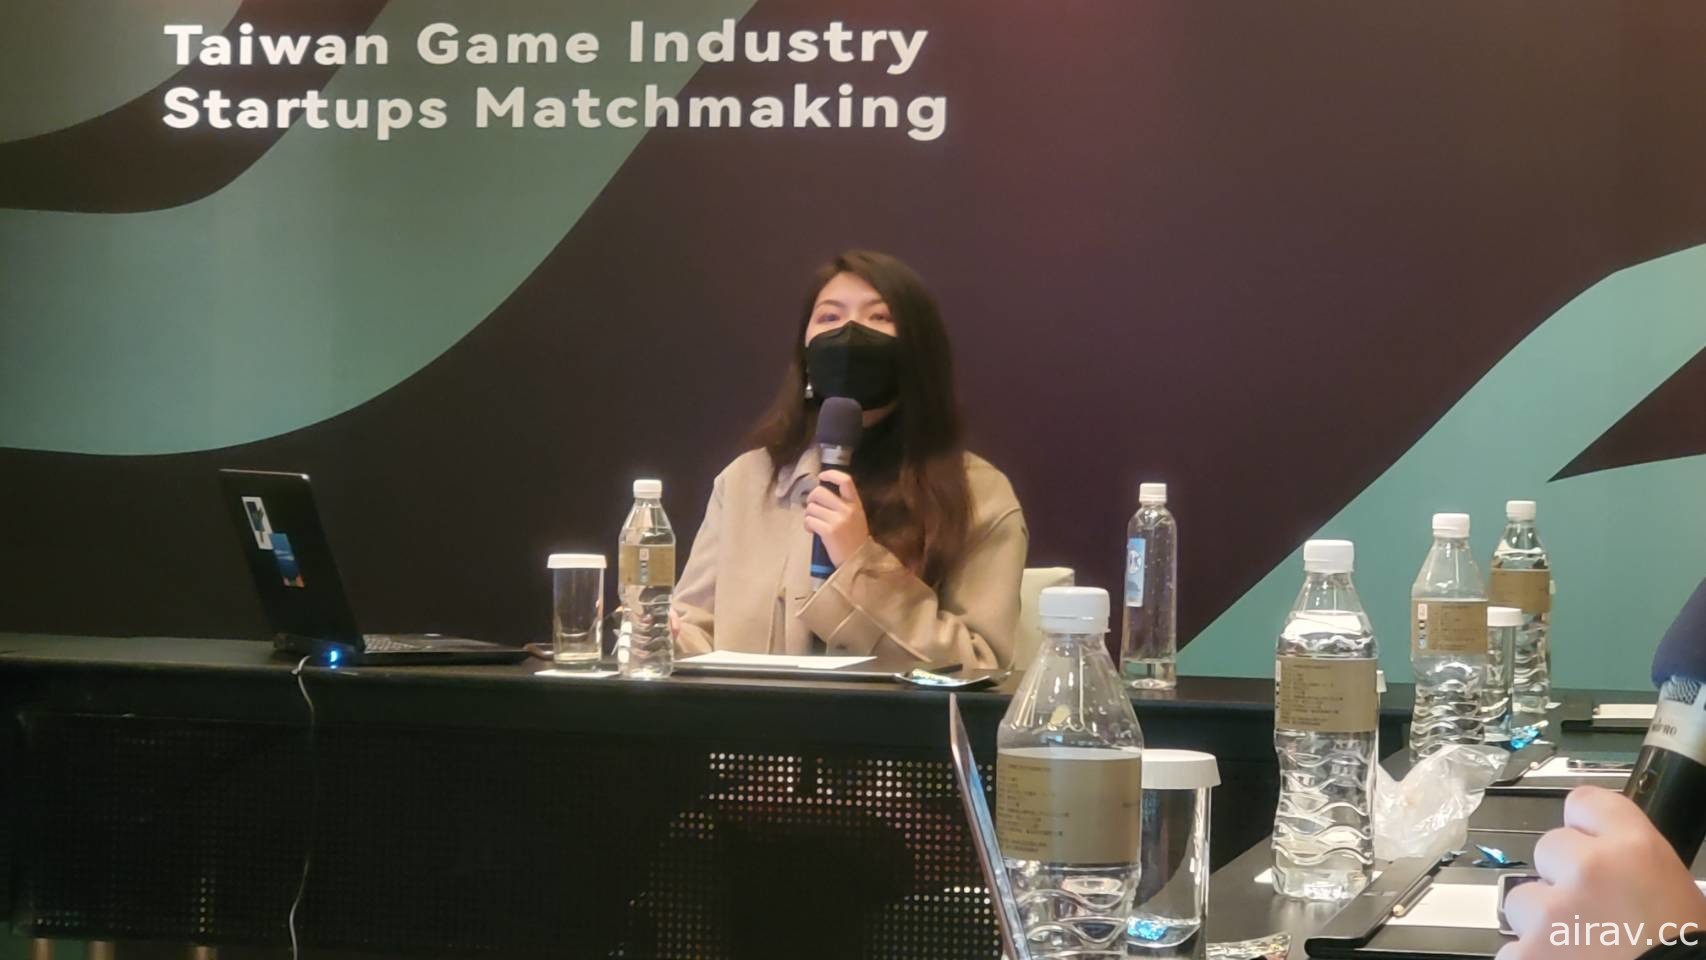 【TpGS 22】台灣遊戲產業新創媒合會昨日登場 協助台灣自製獨立遊戲跨足海外市場